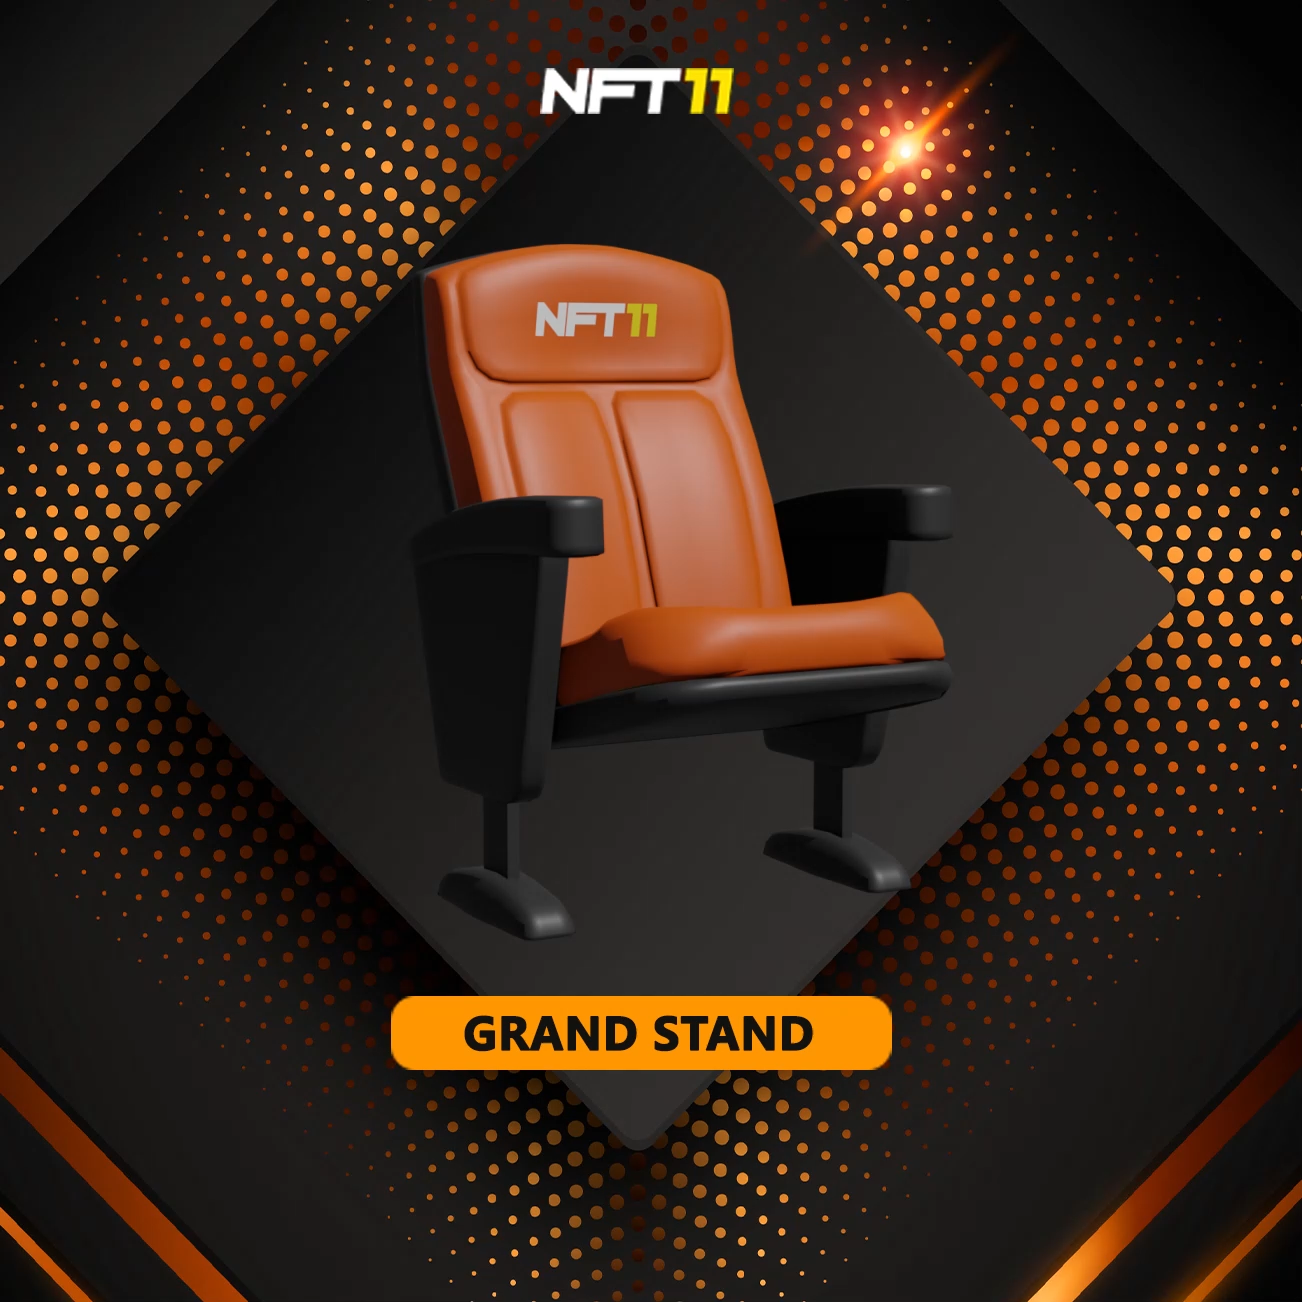 Nft NFT11 Stadium